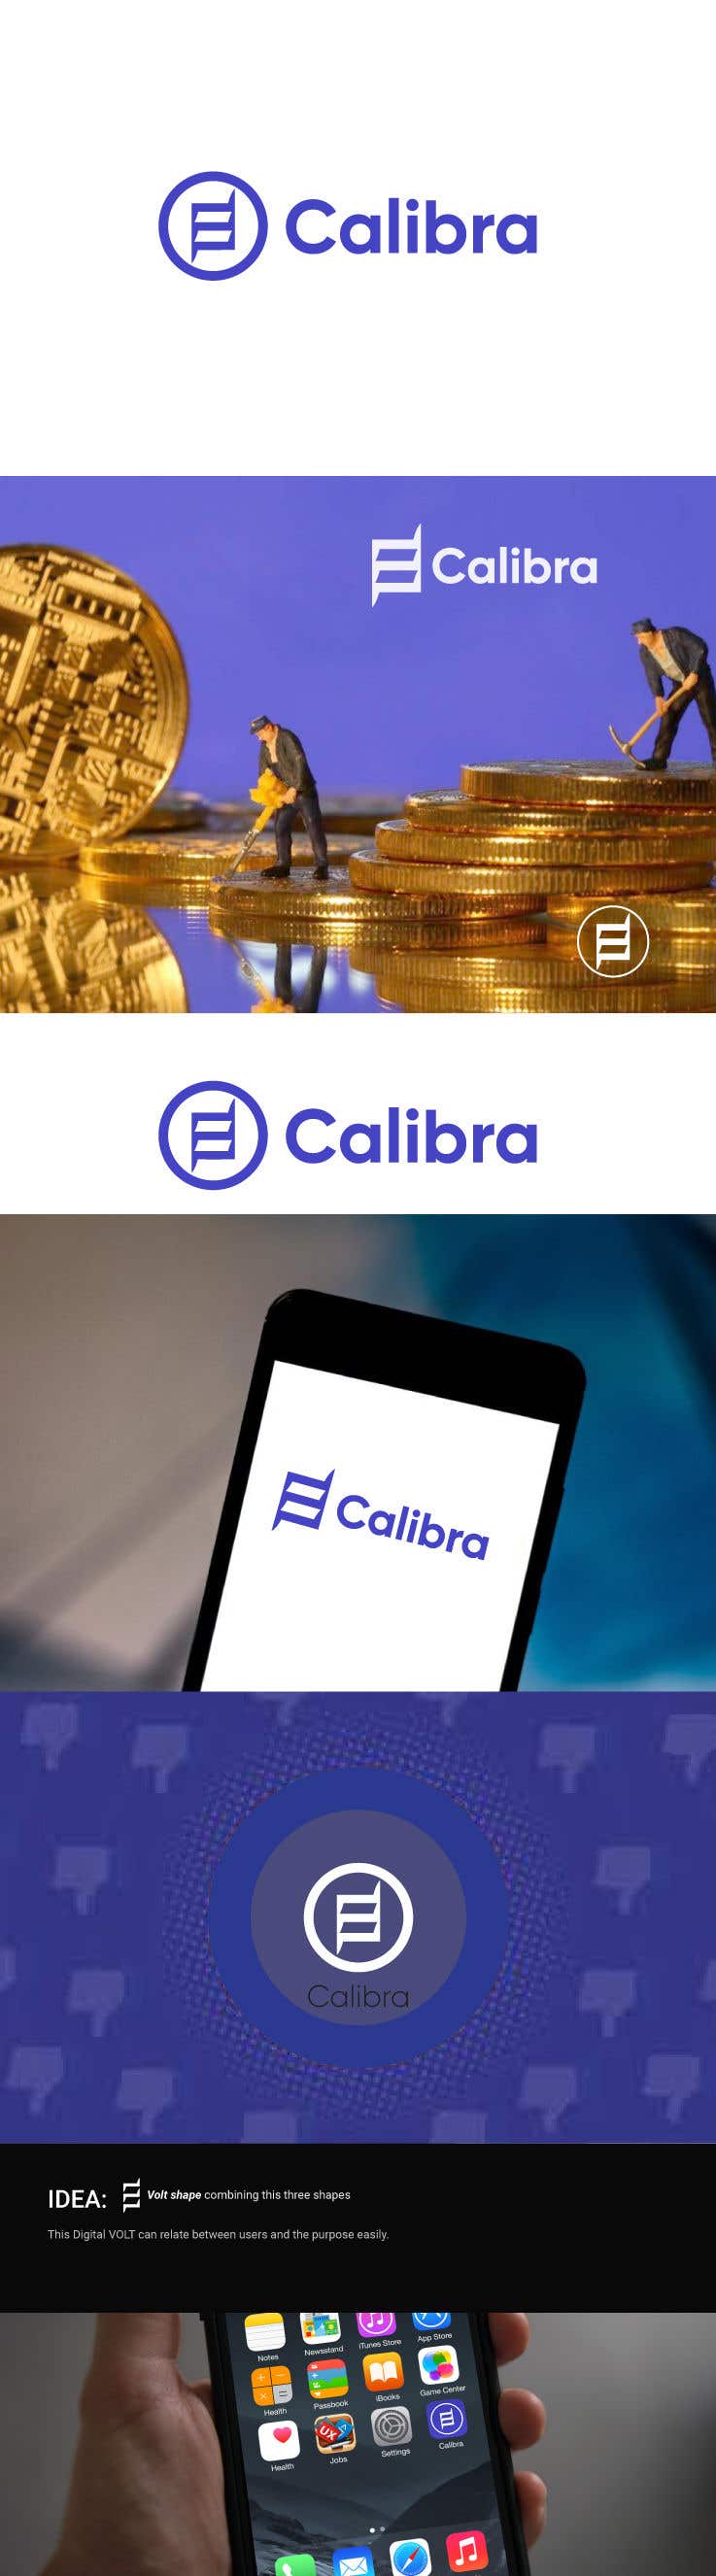 Konkurrenceindlæg #1220 for                                                 Design a new logo for Facebook's Calibra for $500!
                                            